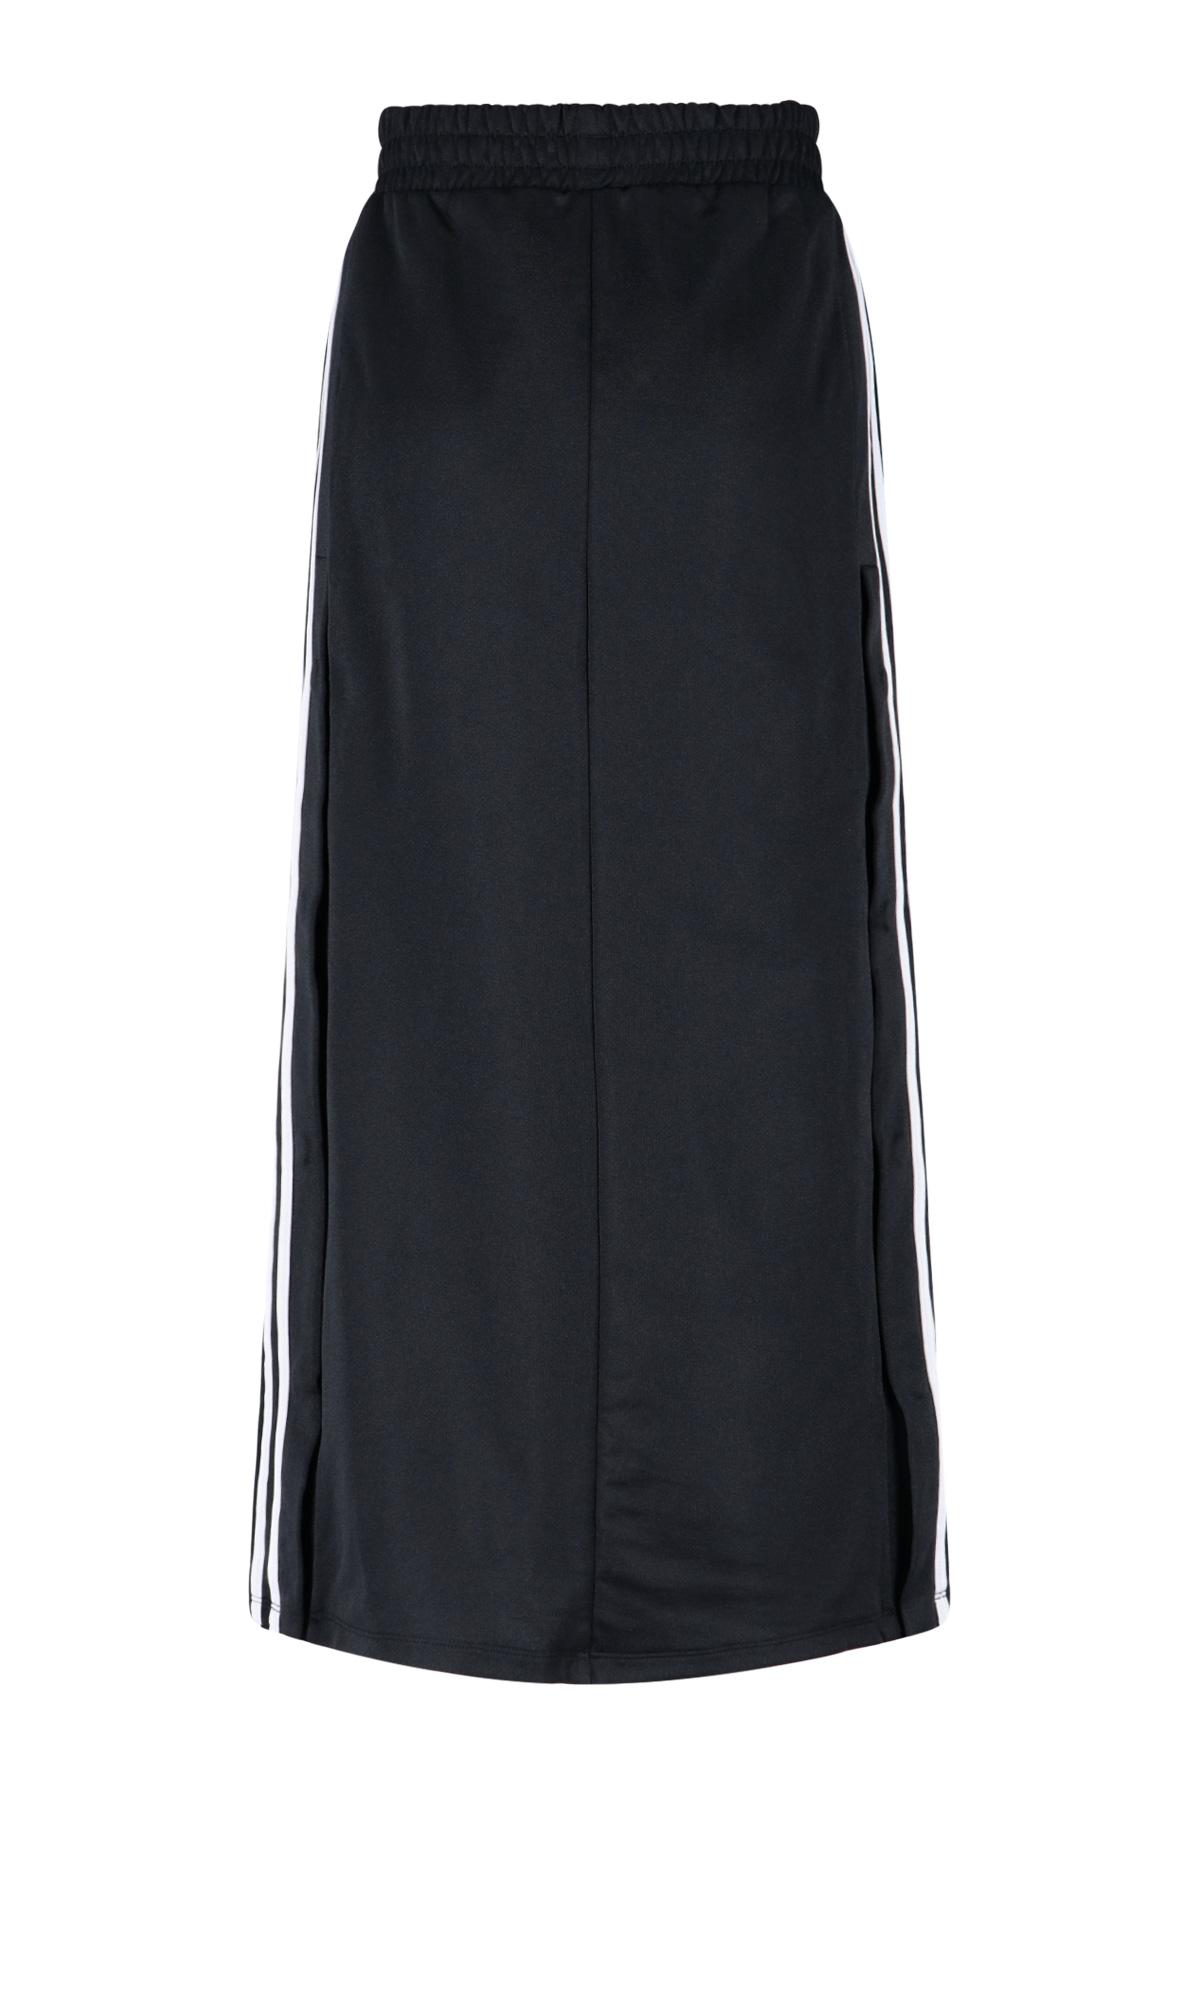 adidas Originals Maxi Sporty Skirt in Black | Lyst